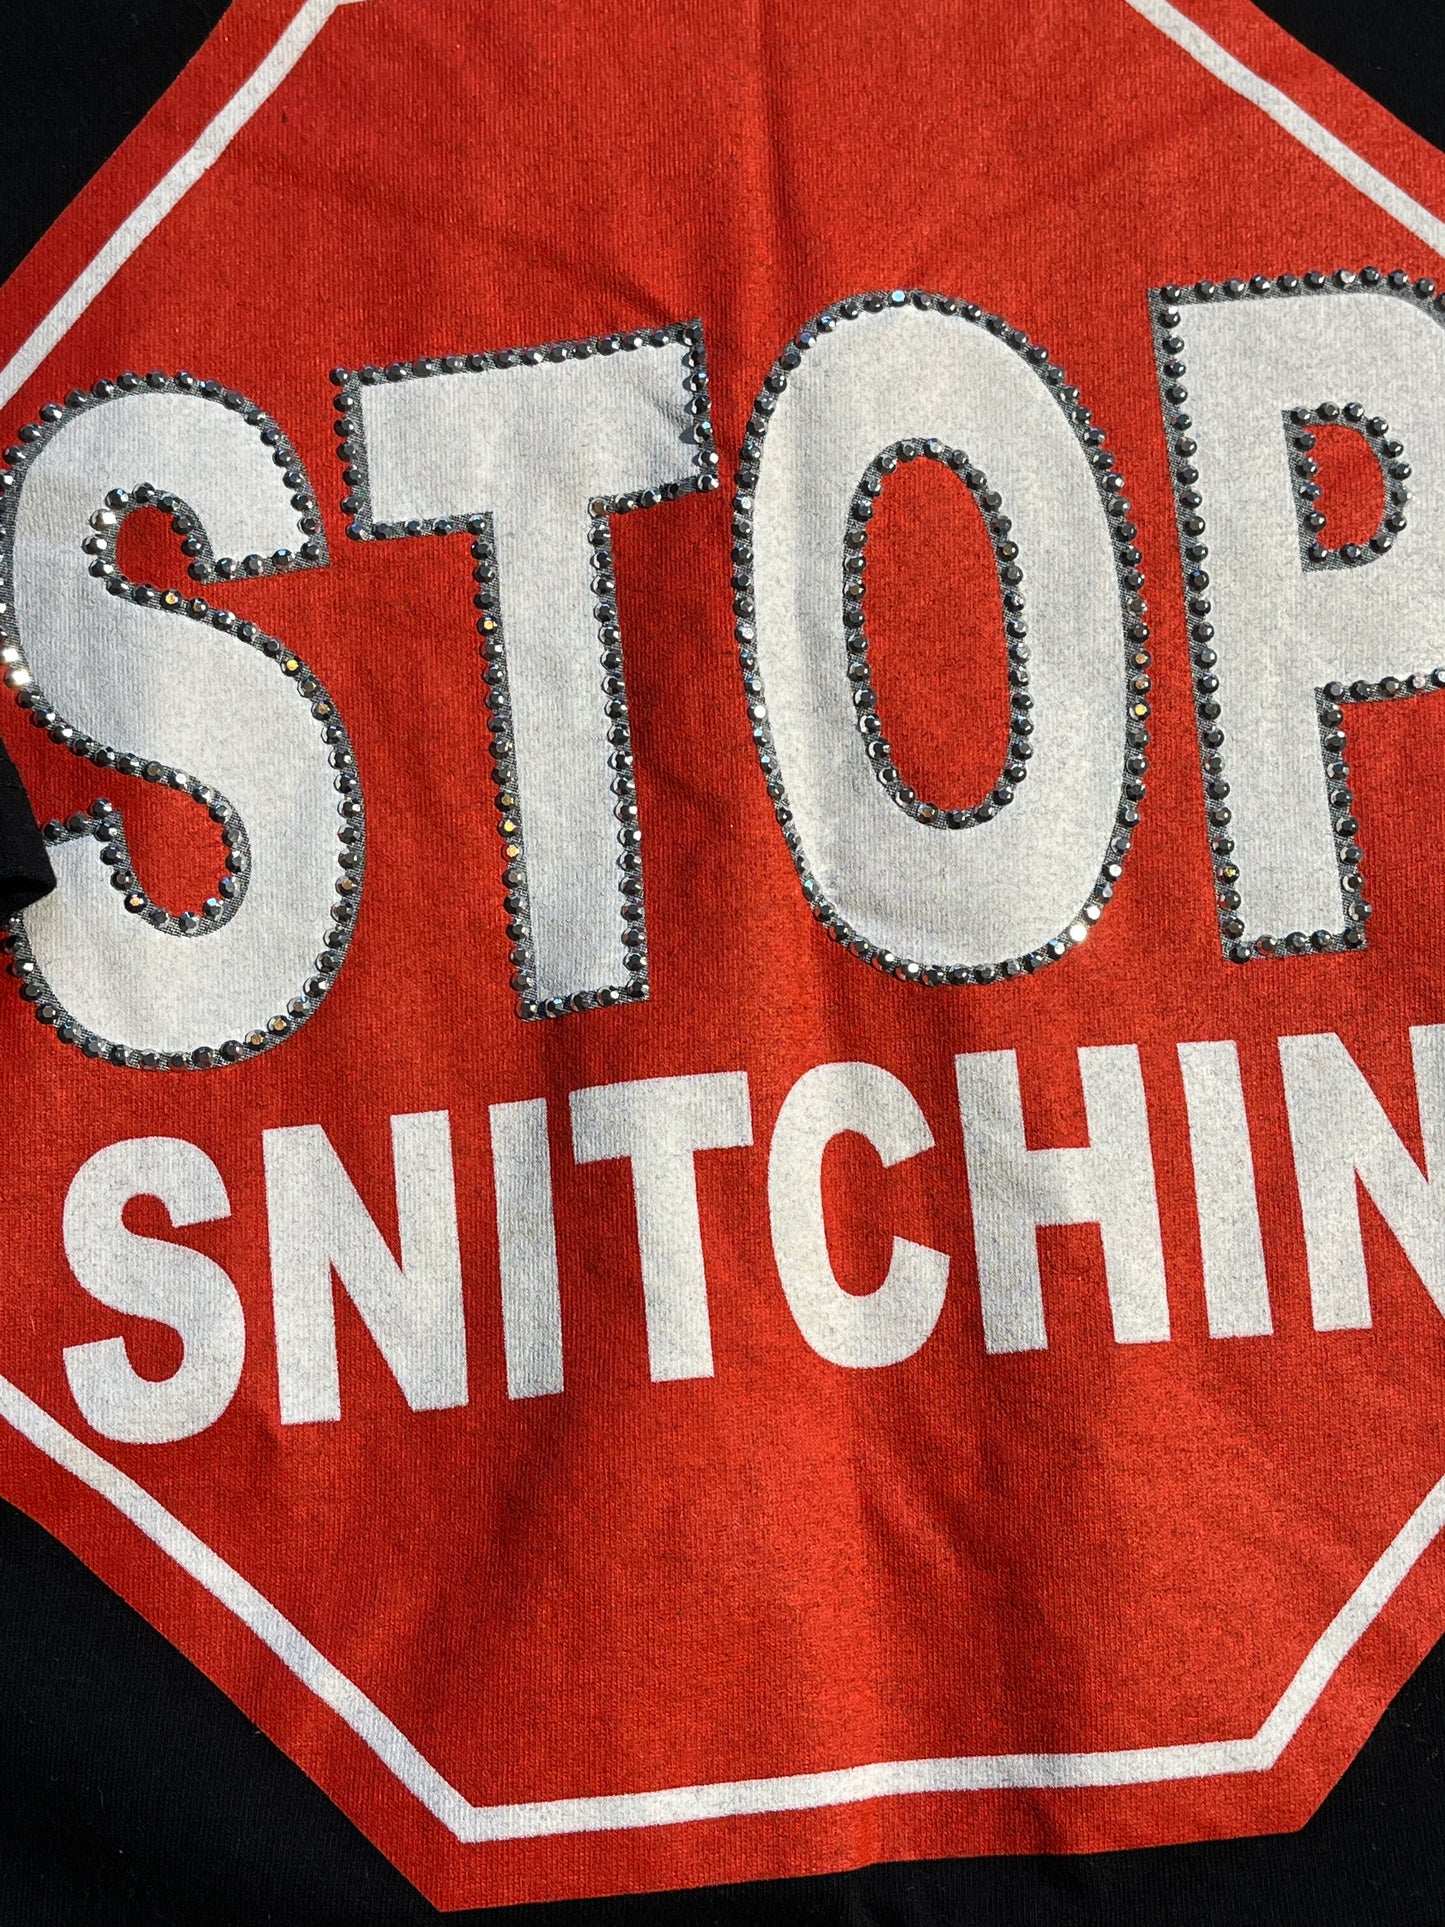 Vintage Stop Snitchin' T-Shirt